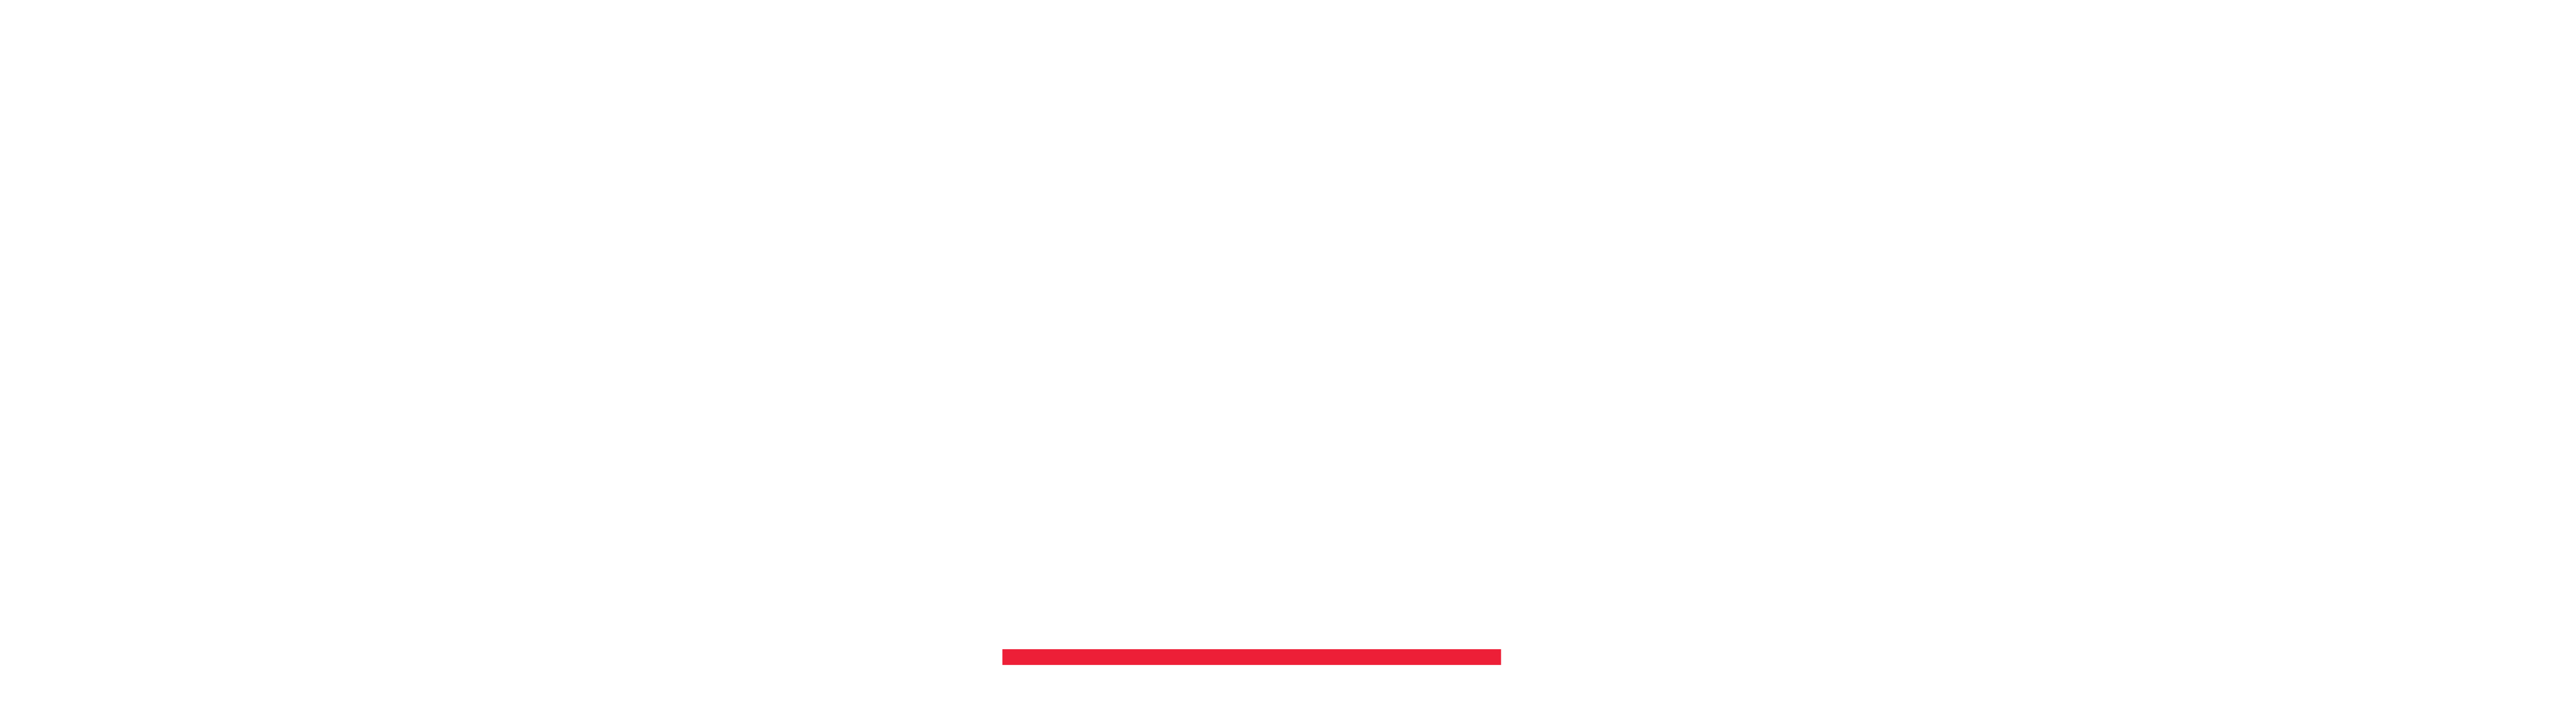 Sermon On The Mount_SQ website